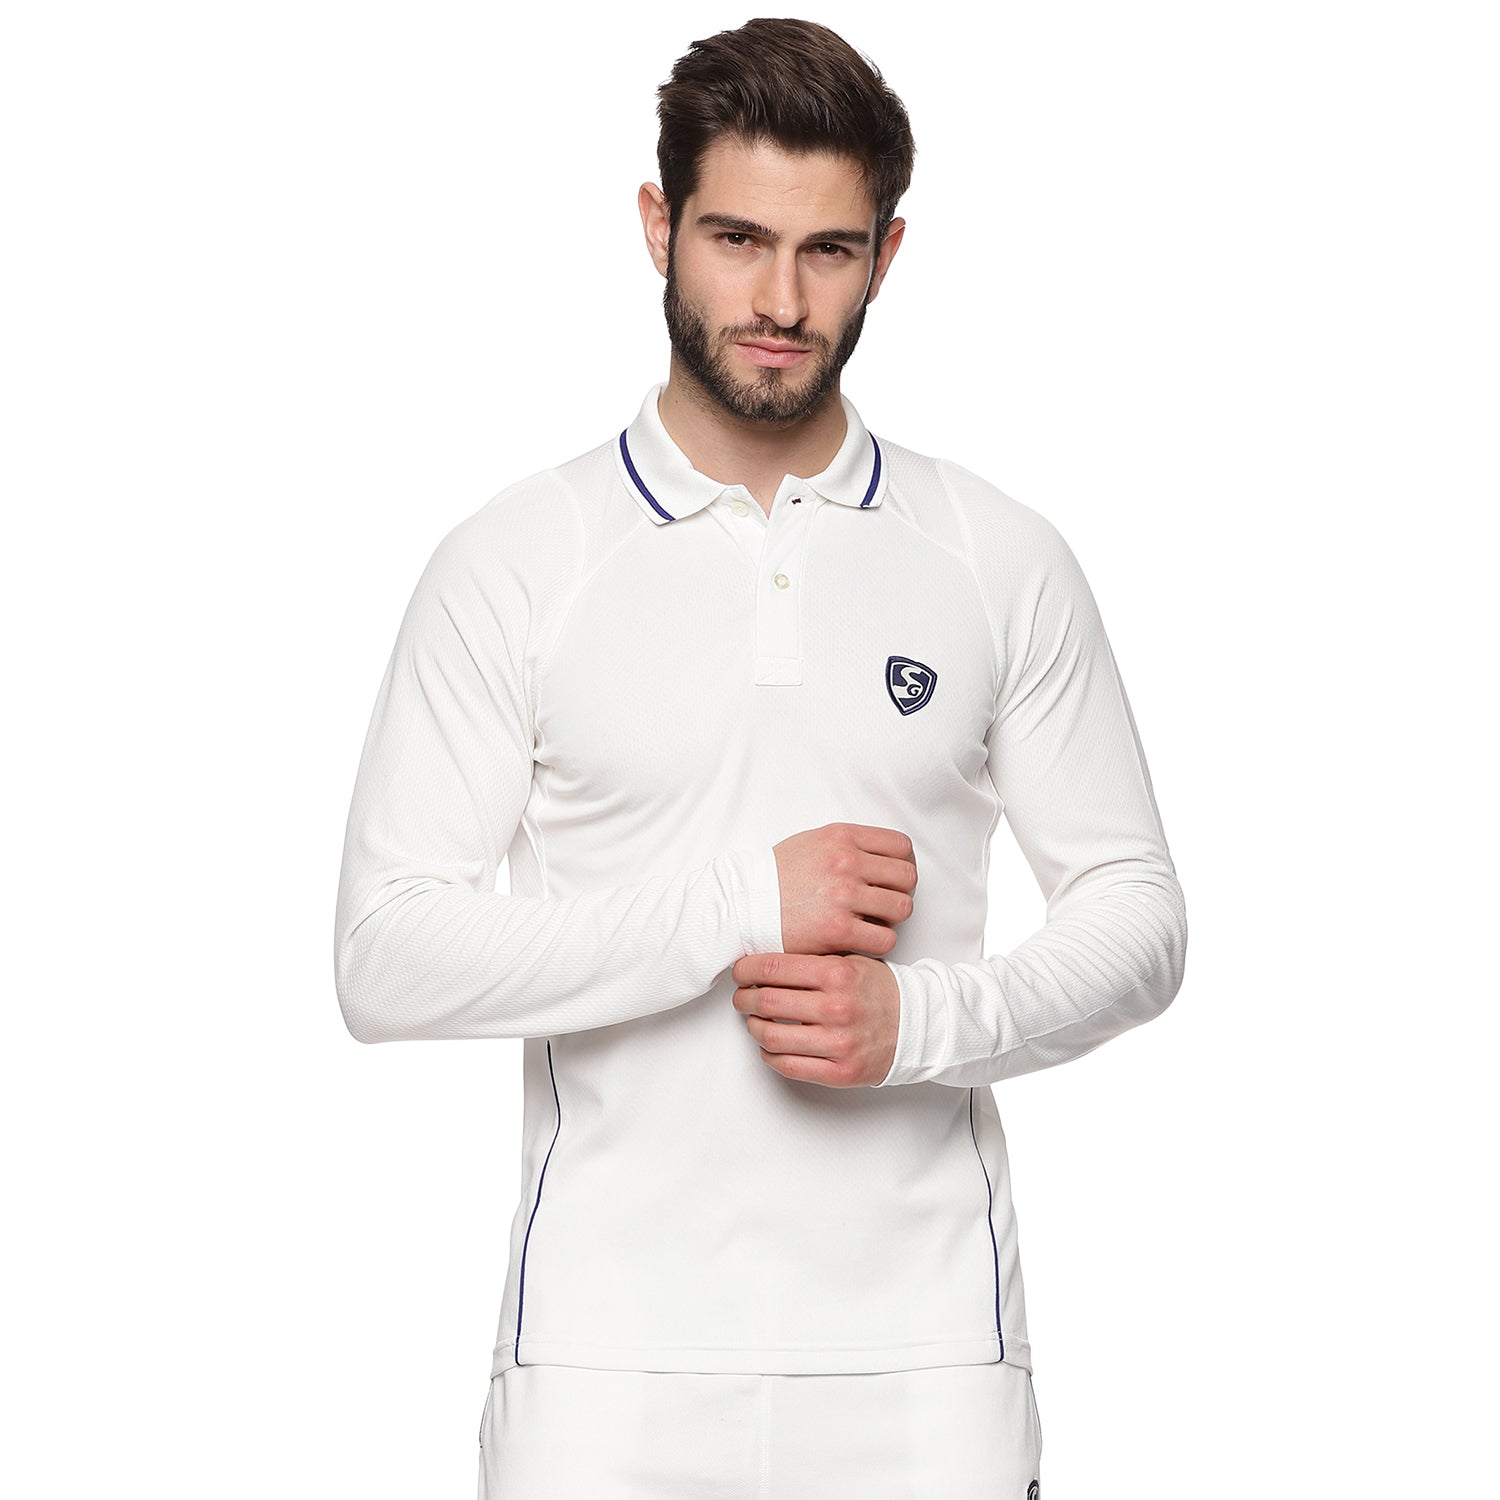 SG Test Full Sleeve Polyester Cricket Shirt (Off-White) - Best Price online Prokicksports.com